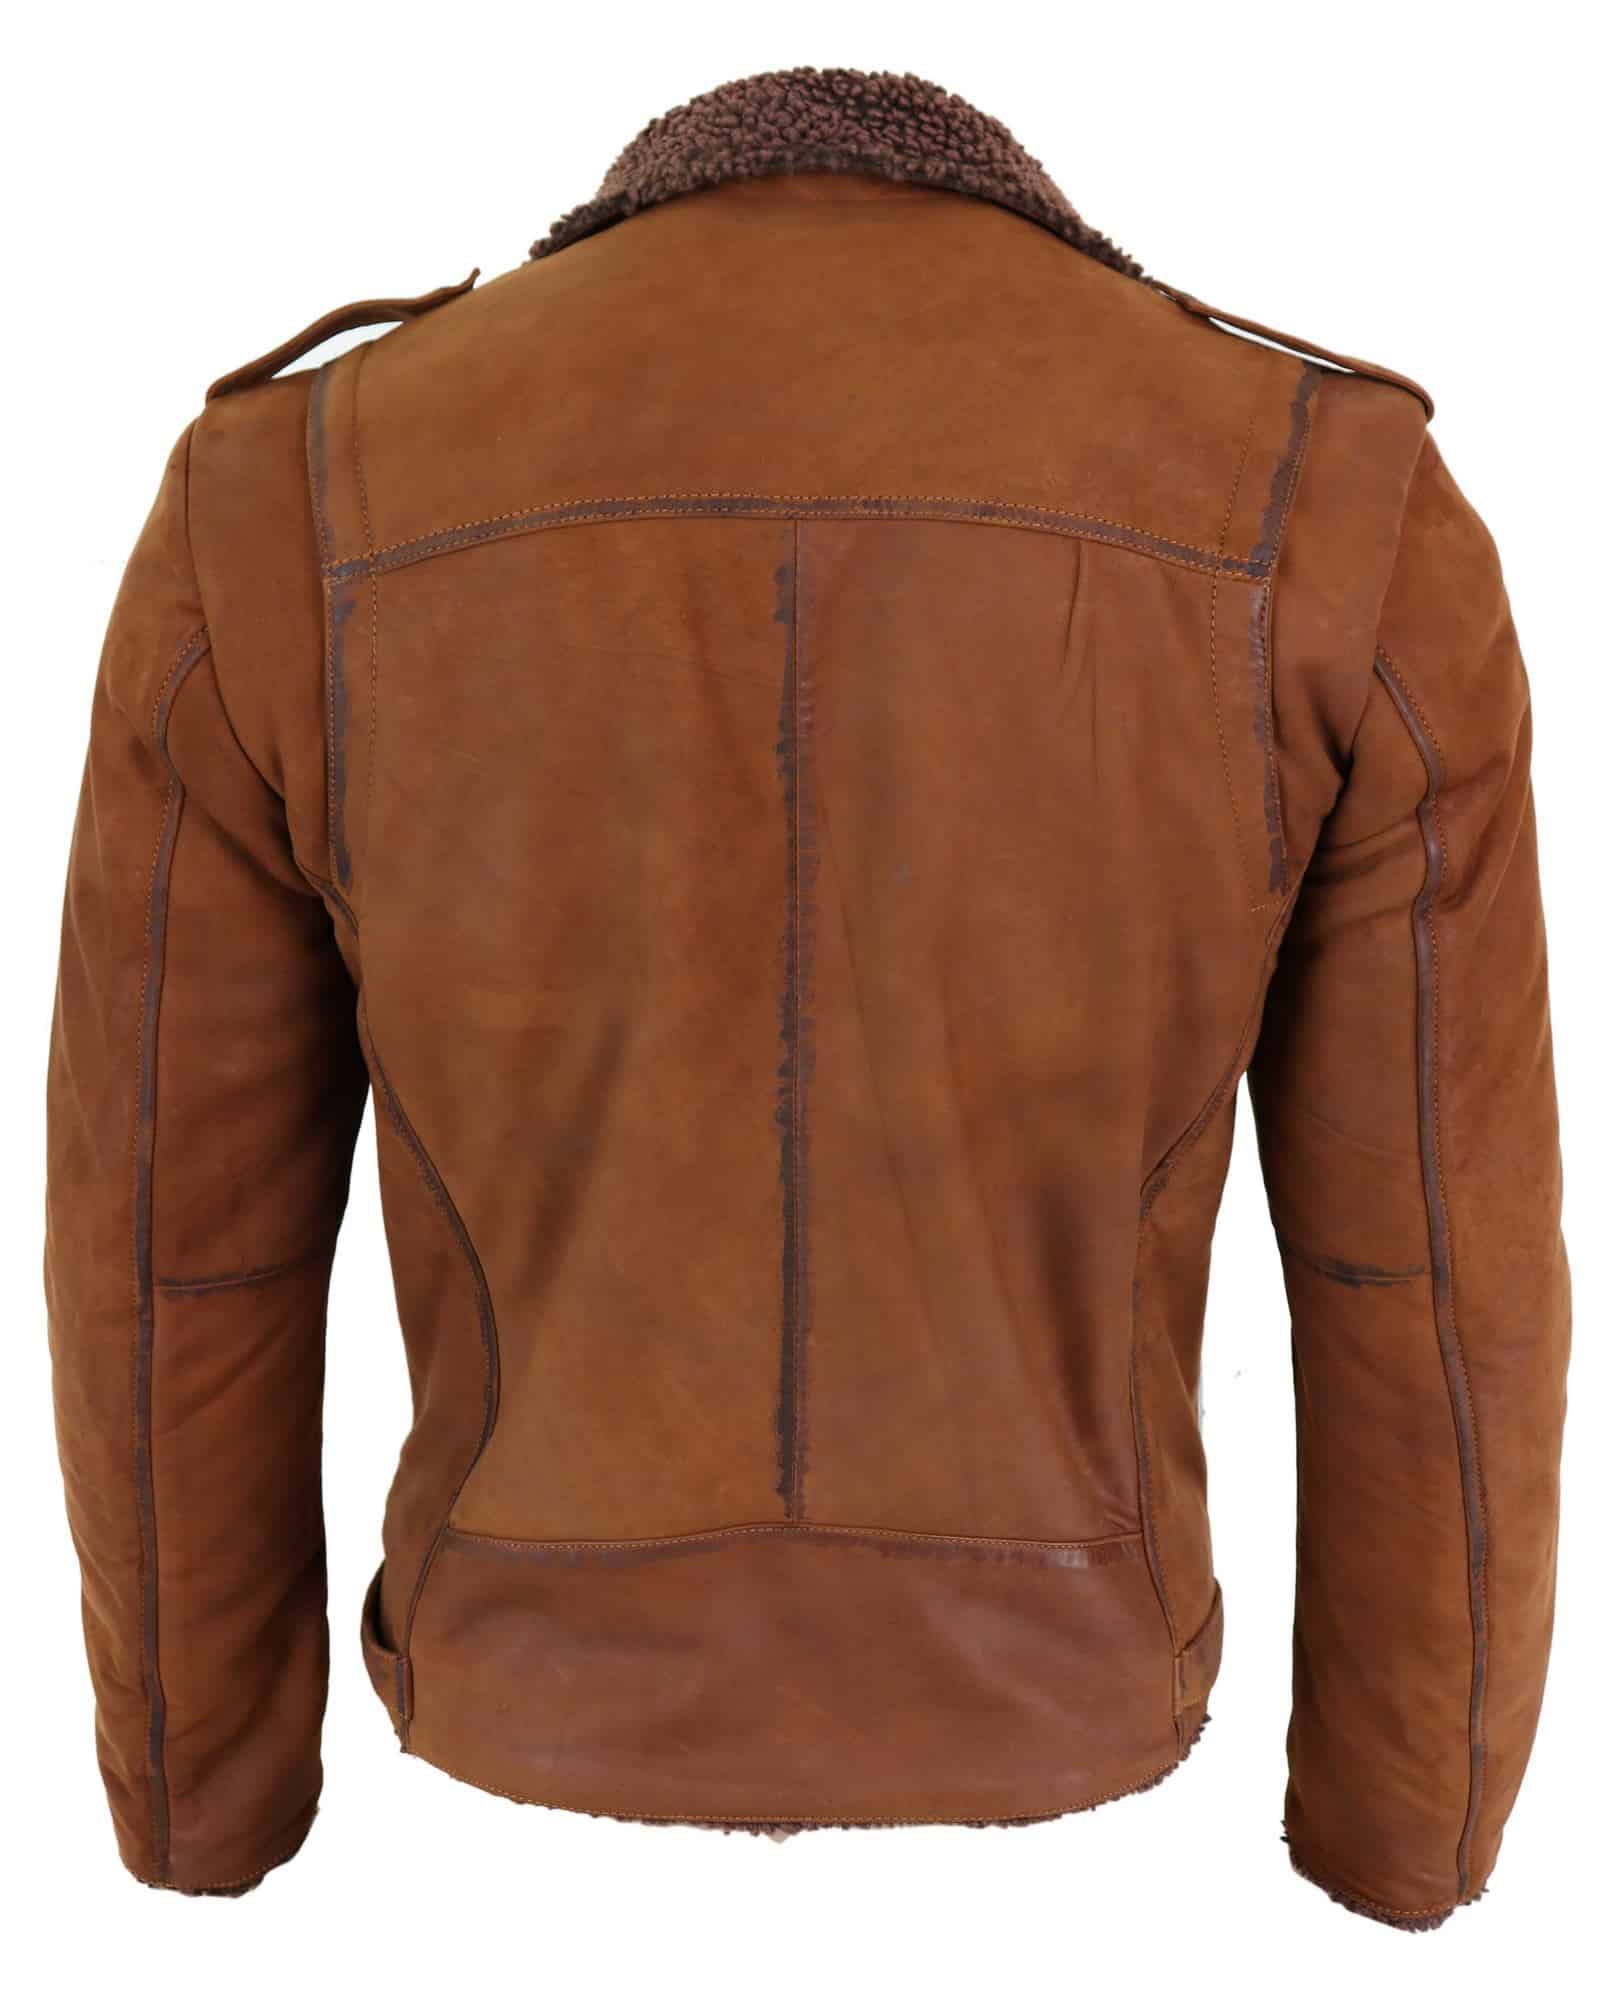 https://happygentleman.com/wp-content/uploads/2019/11/riley-mens-leather-jacket-tan-brown5.jpg